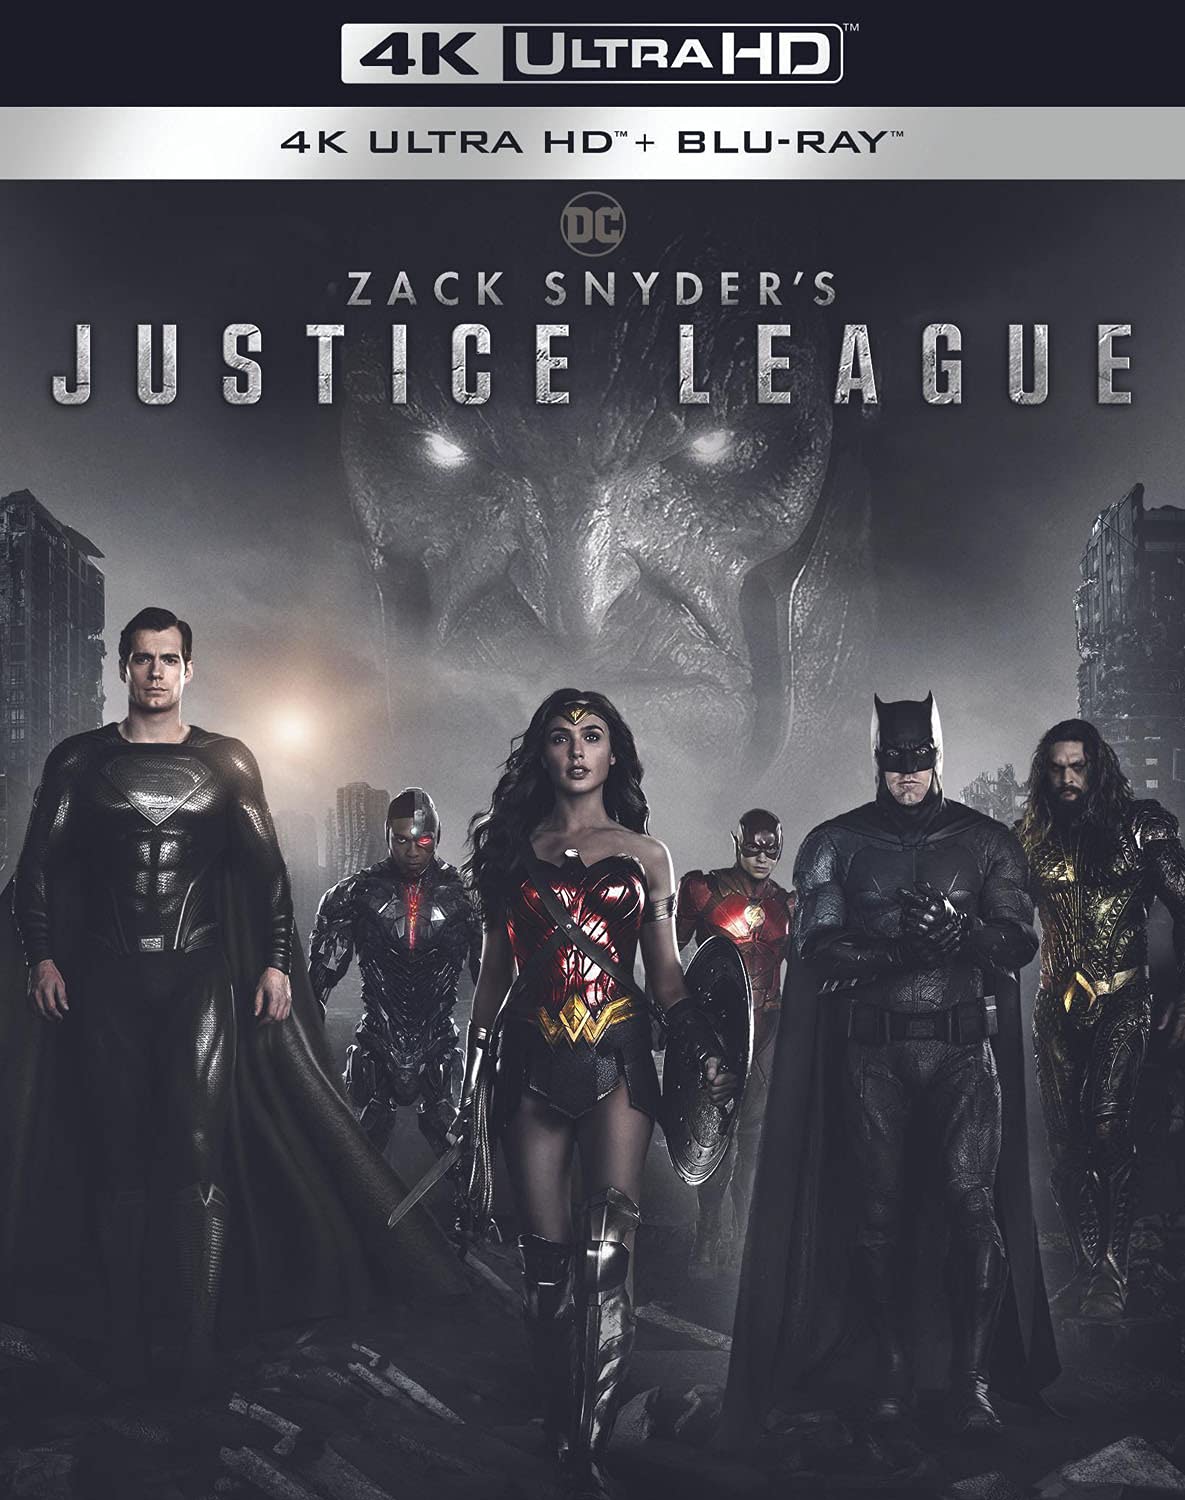 Zack Snyder’s Justice League 4k Blu-ray